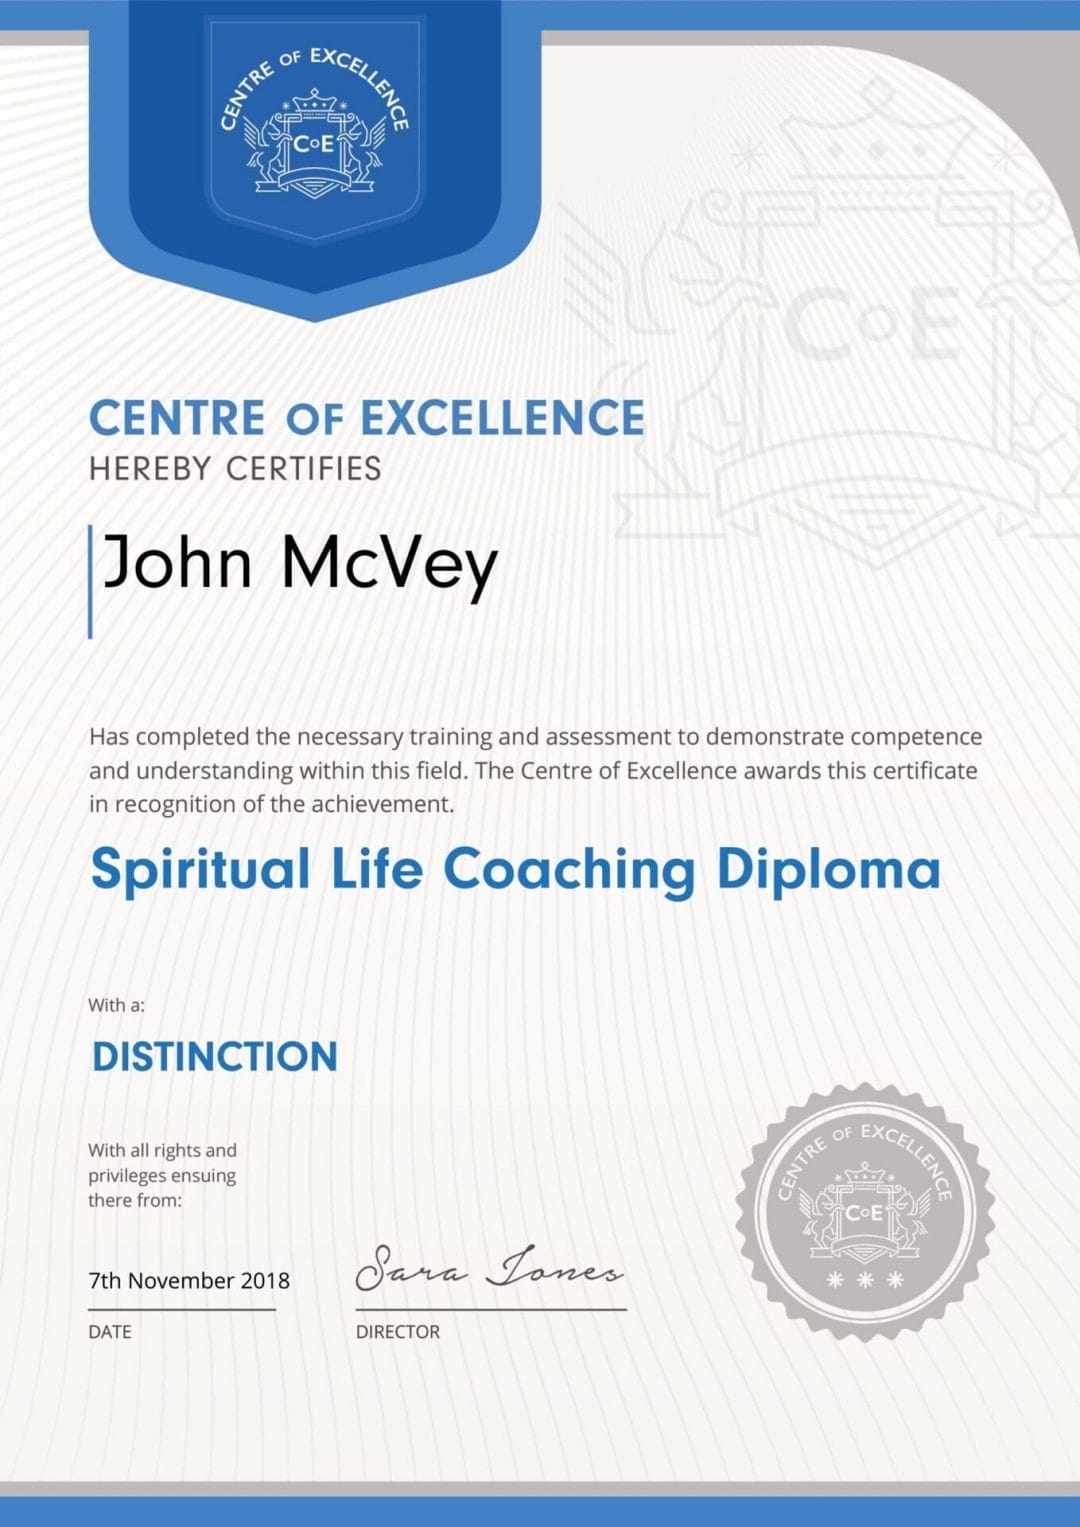 Spiritual life coaching diploma certificate.